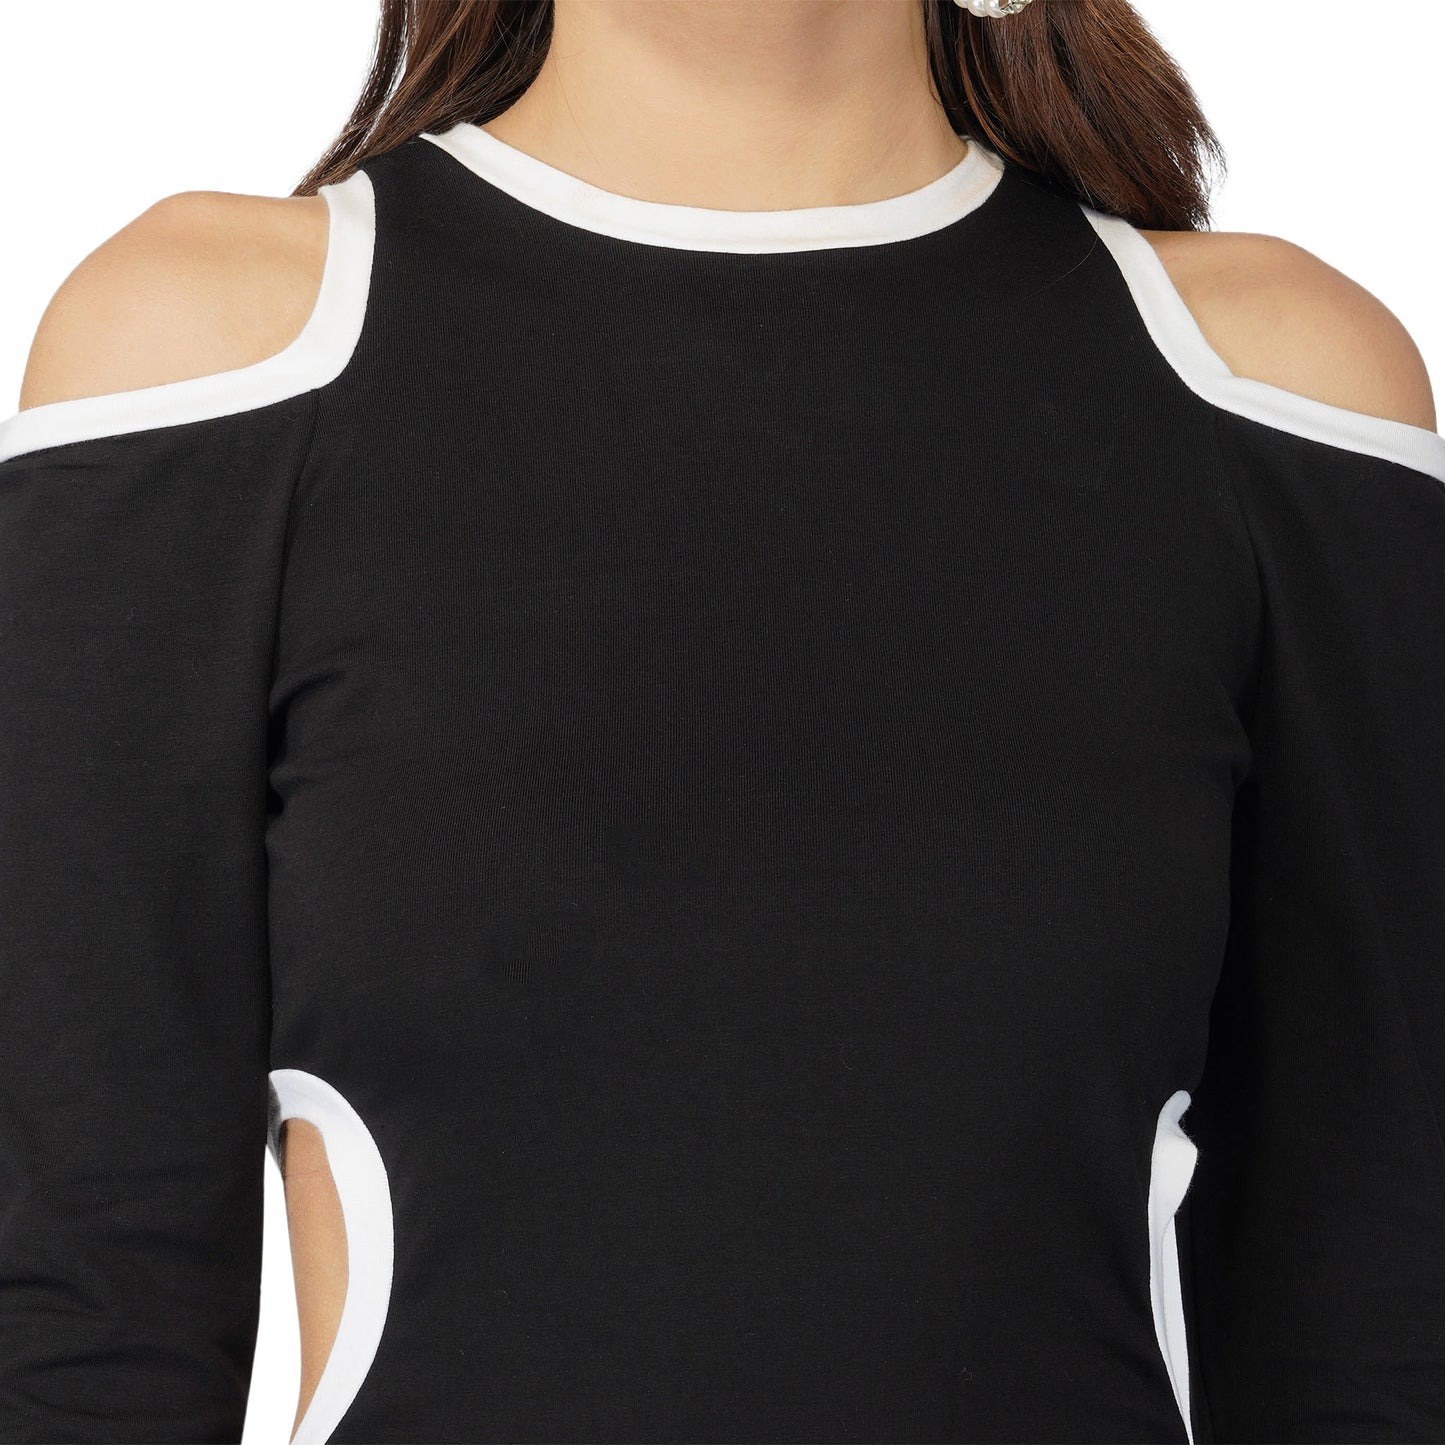 SLAY. Women's Cold Shoulder Side Cutout Black Asymmetric Dress